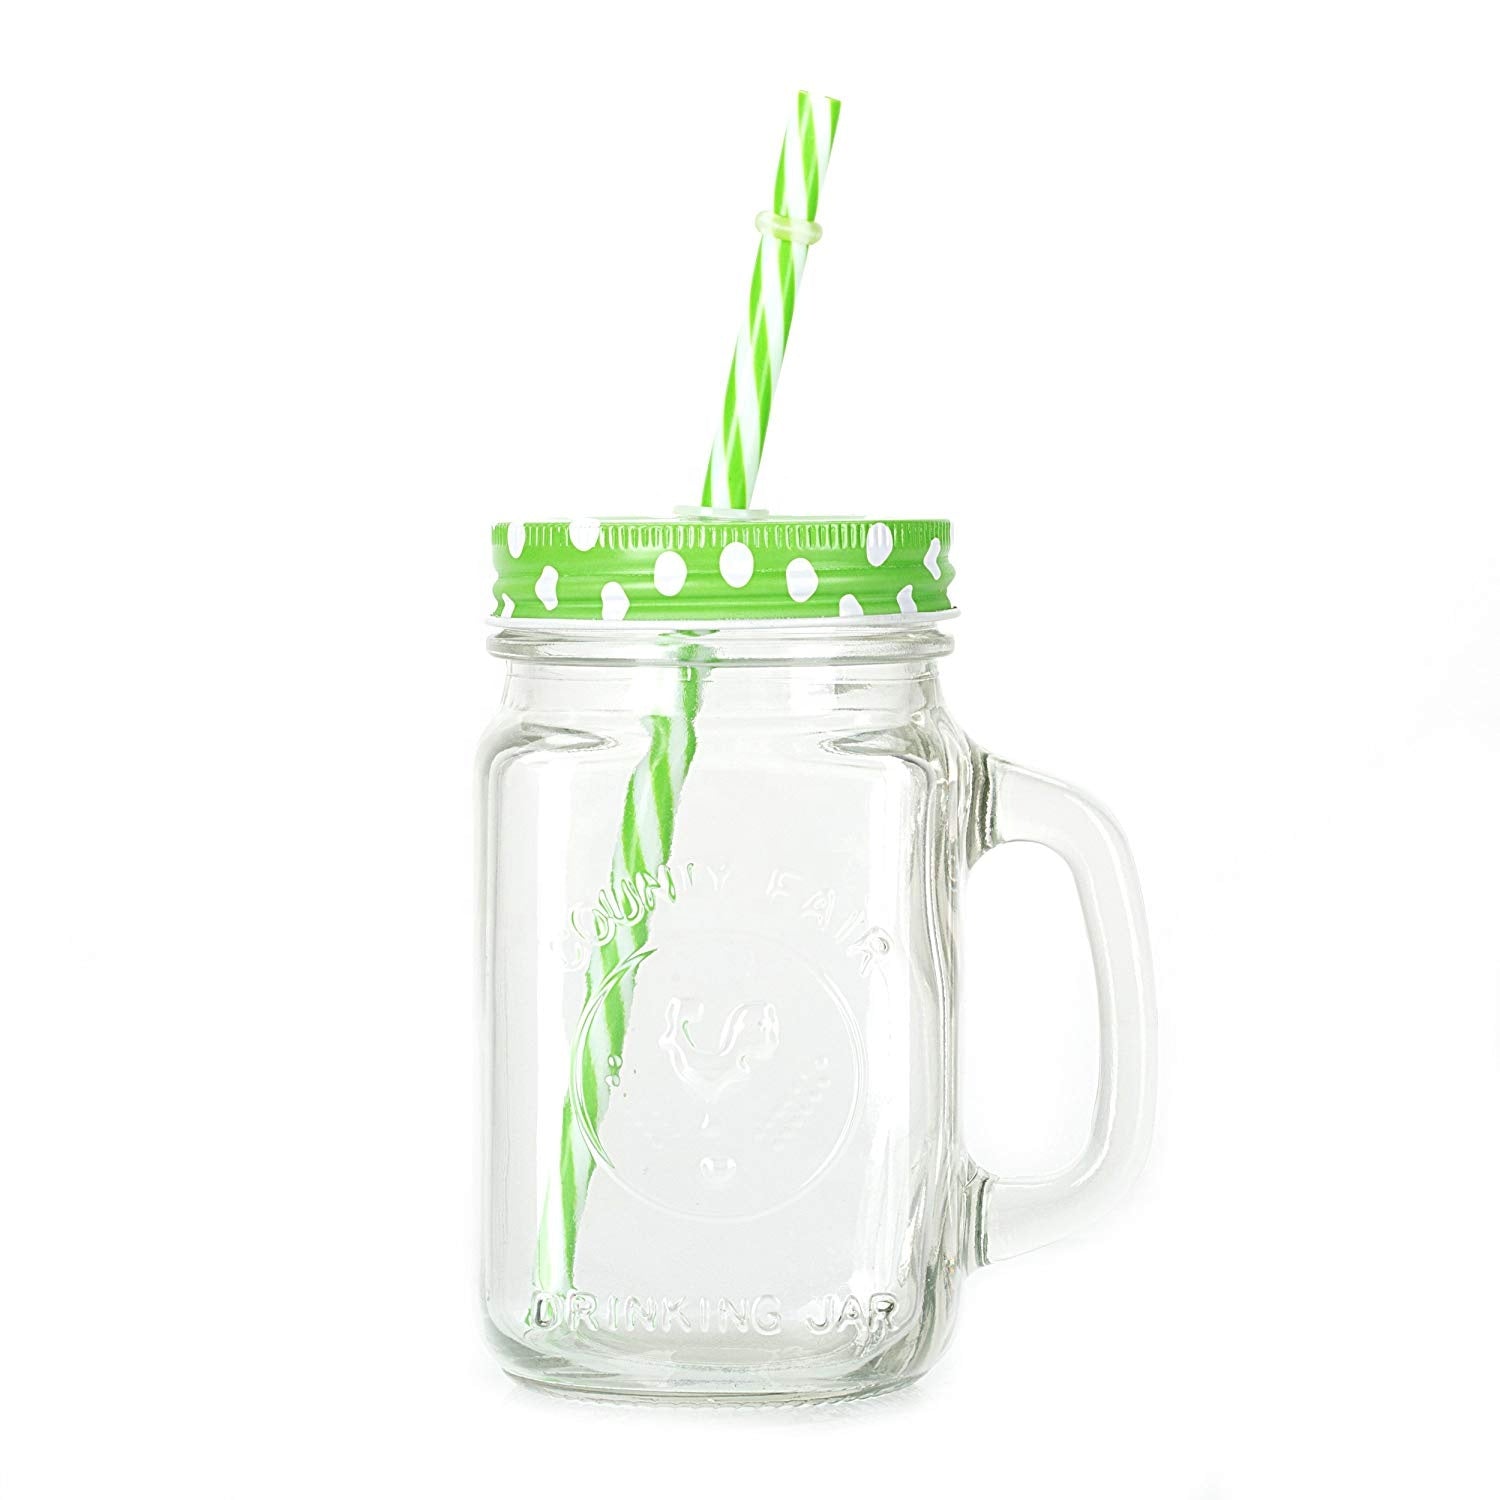 760 Drinking Cup/Glass/Mug Mason Jar with Handle & Straw 